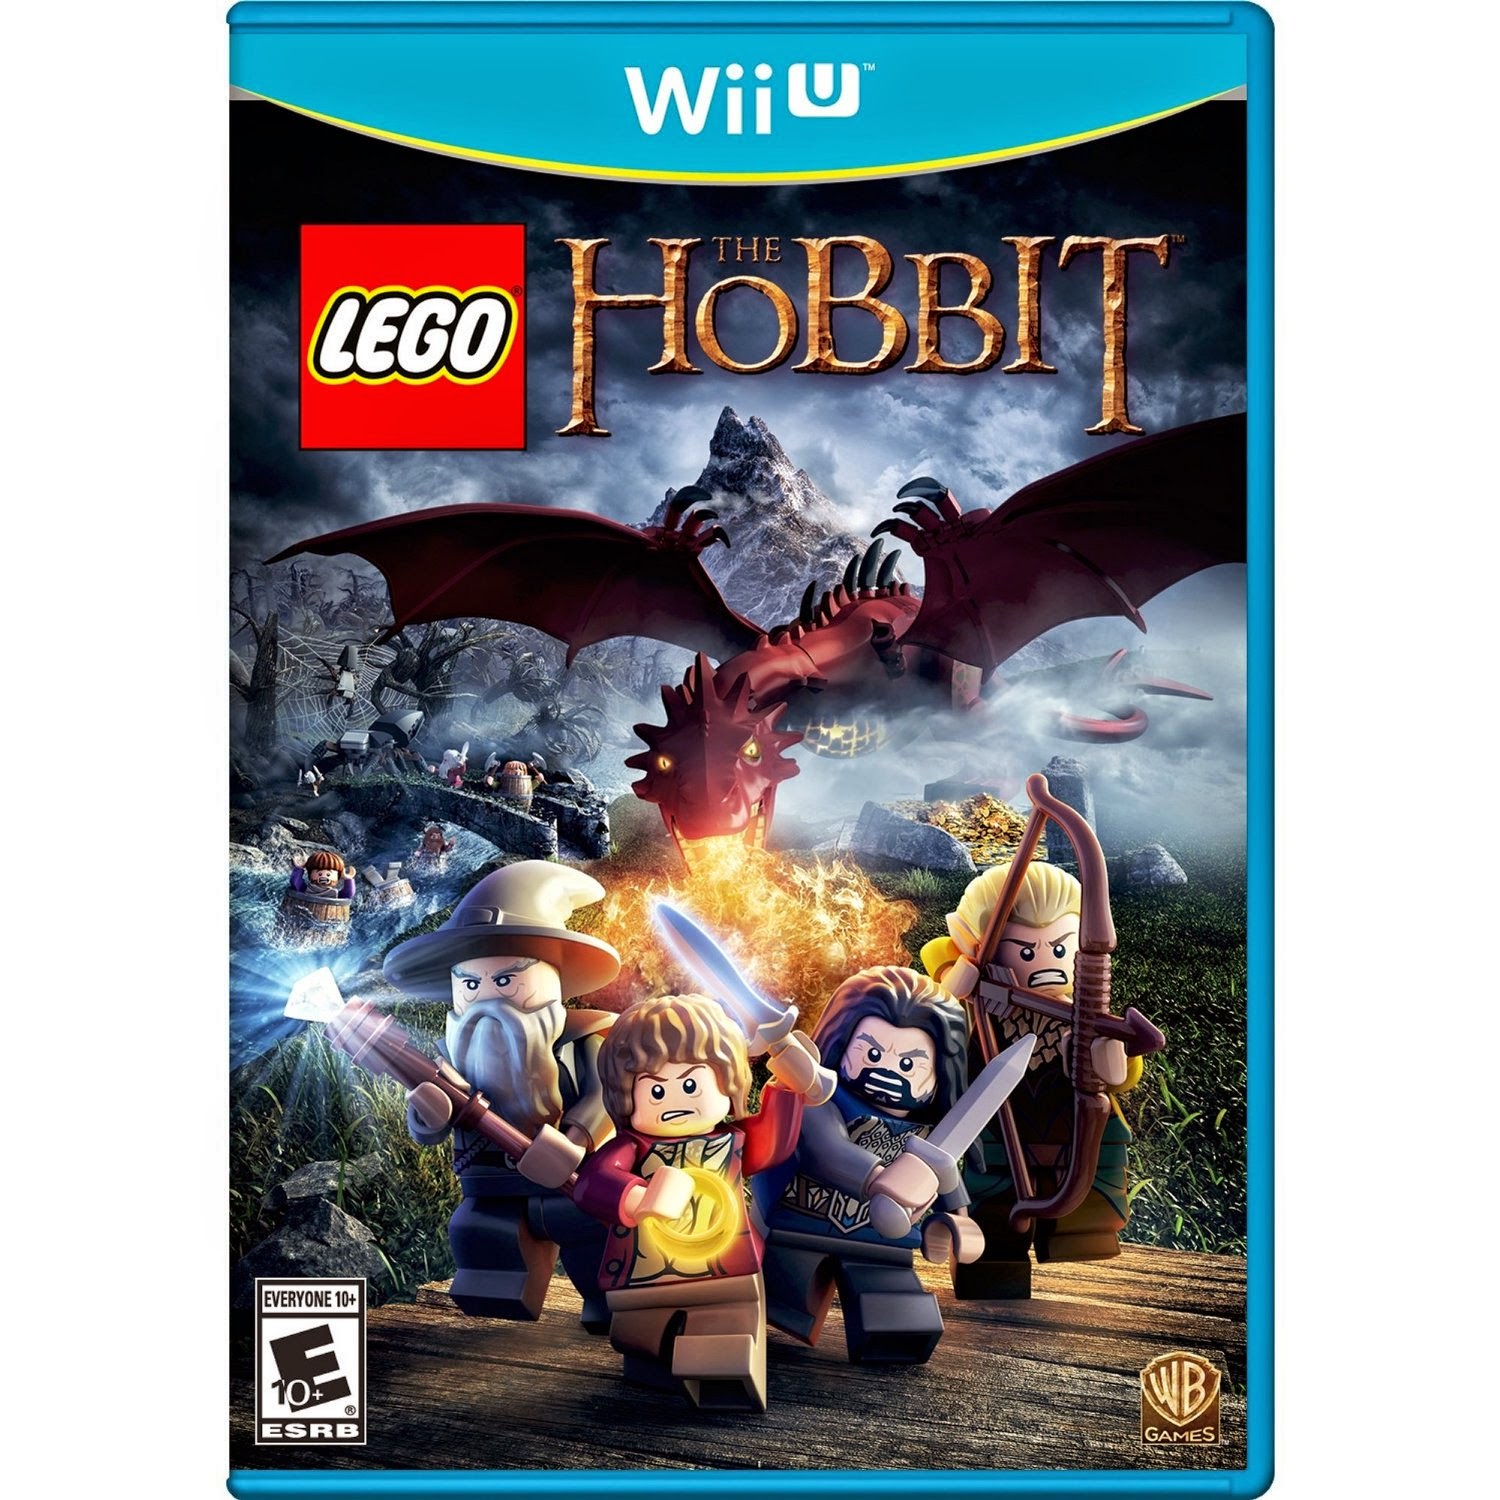 LEGO The Hobbit (WII U)